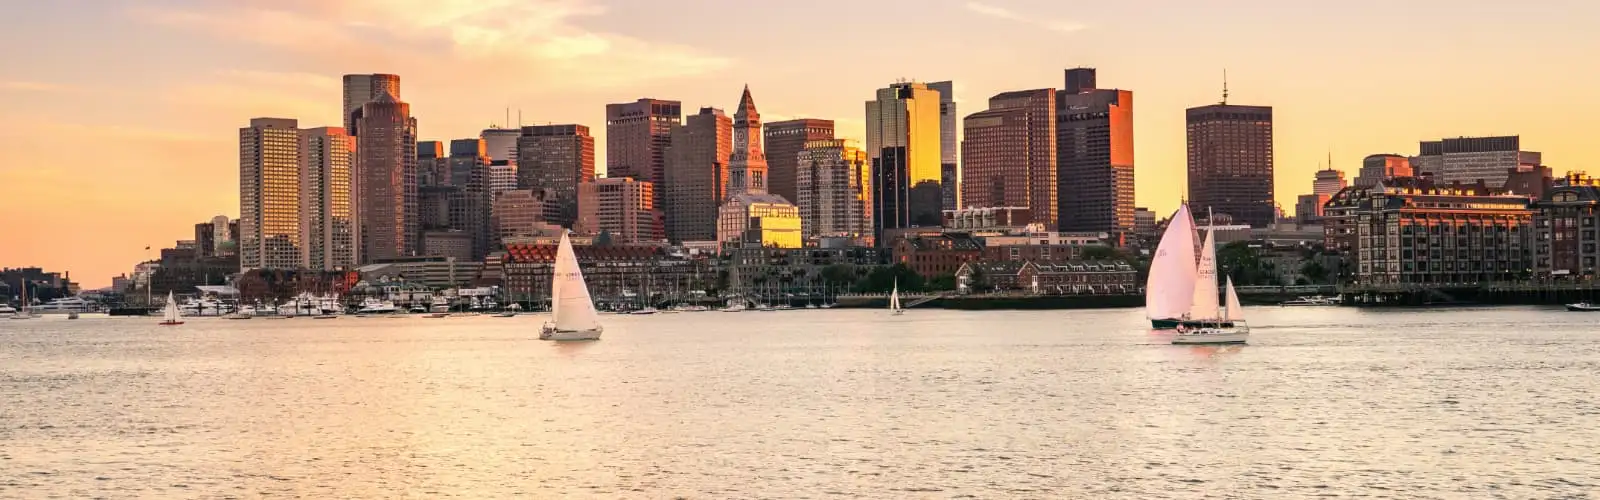 Boston skyline at sunset. Find Massachusetts insurance.